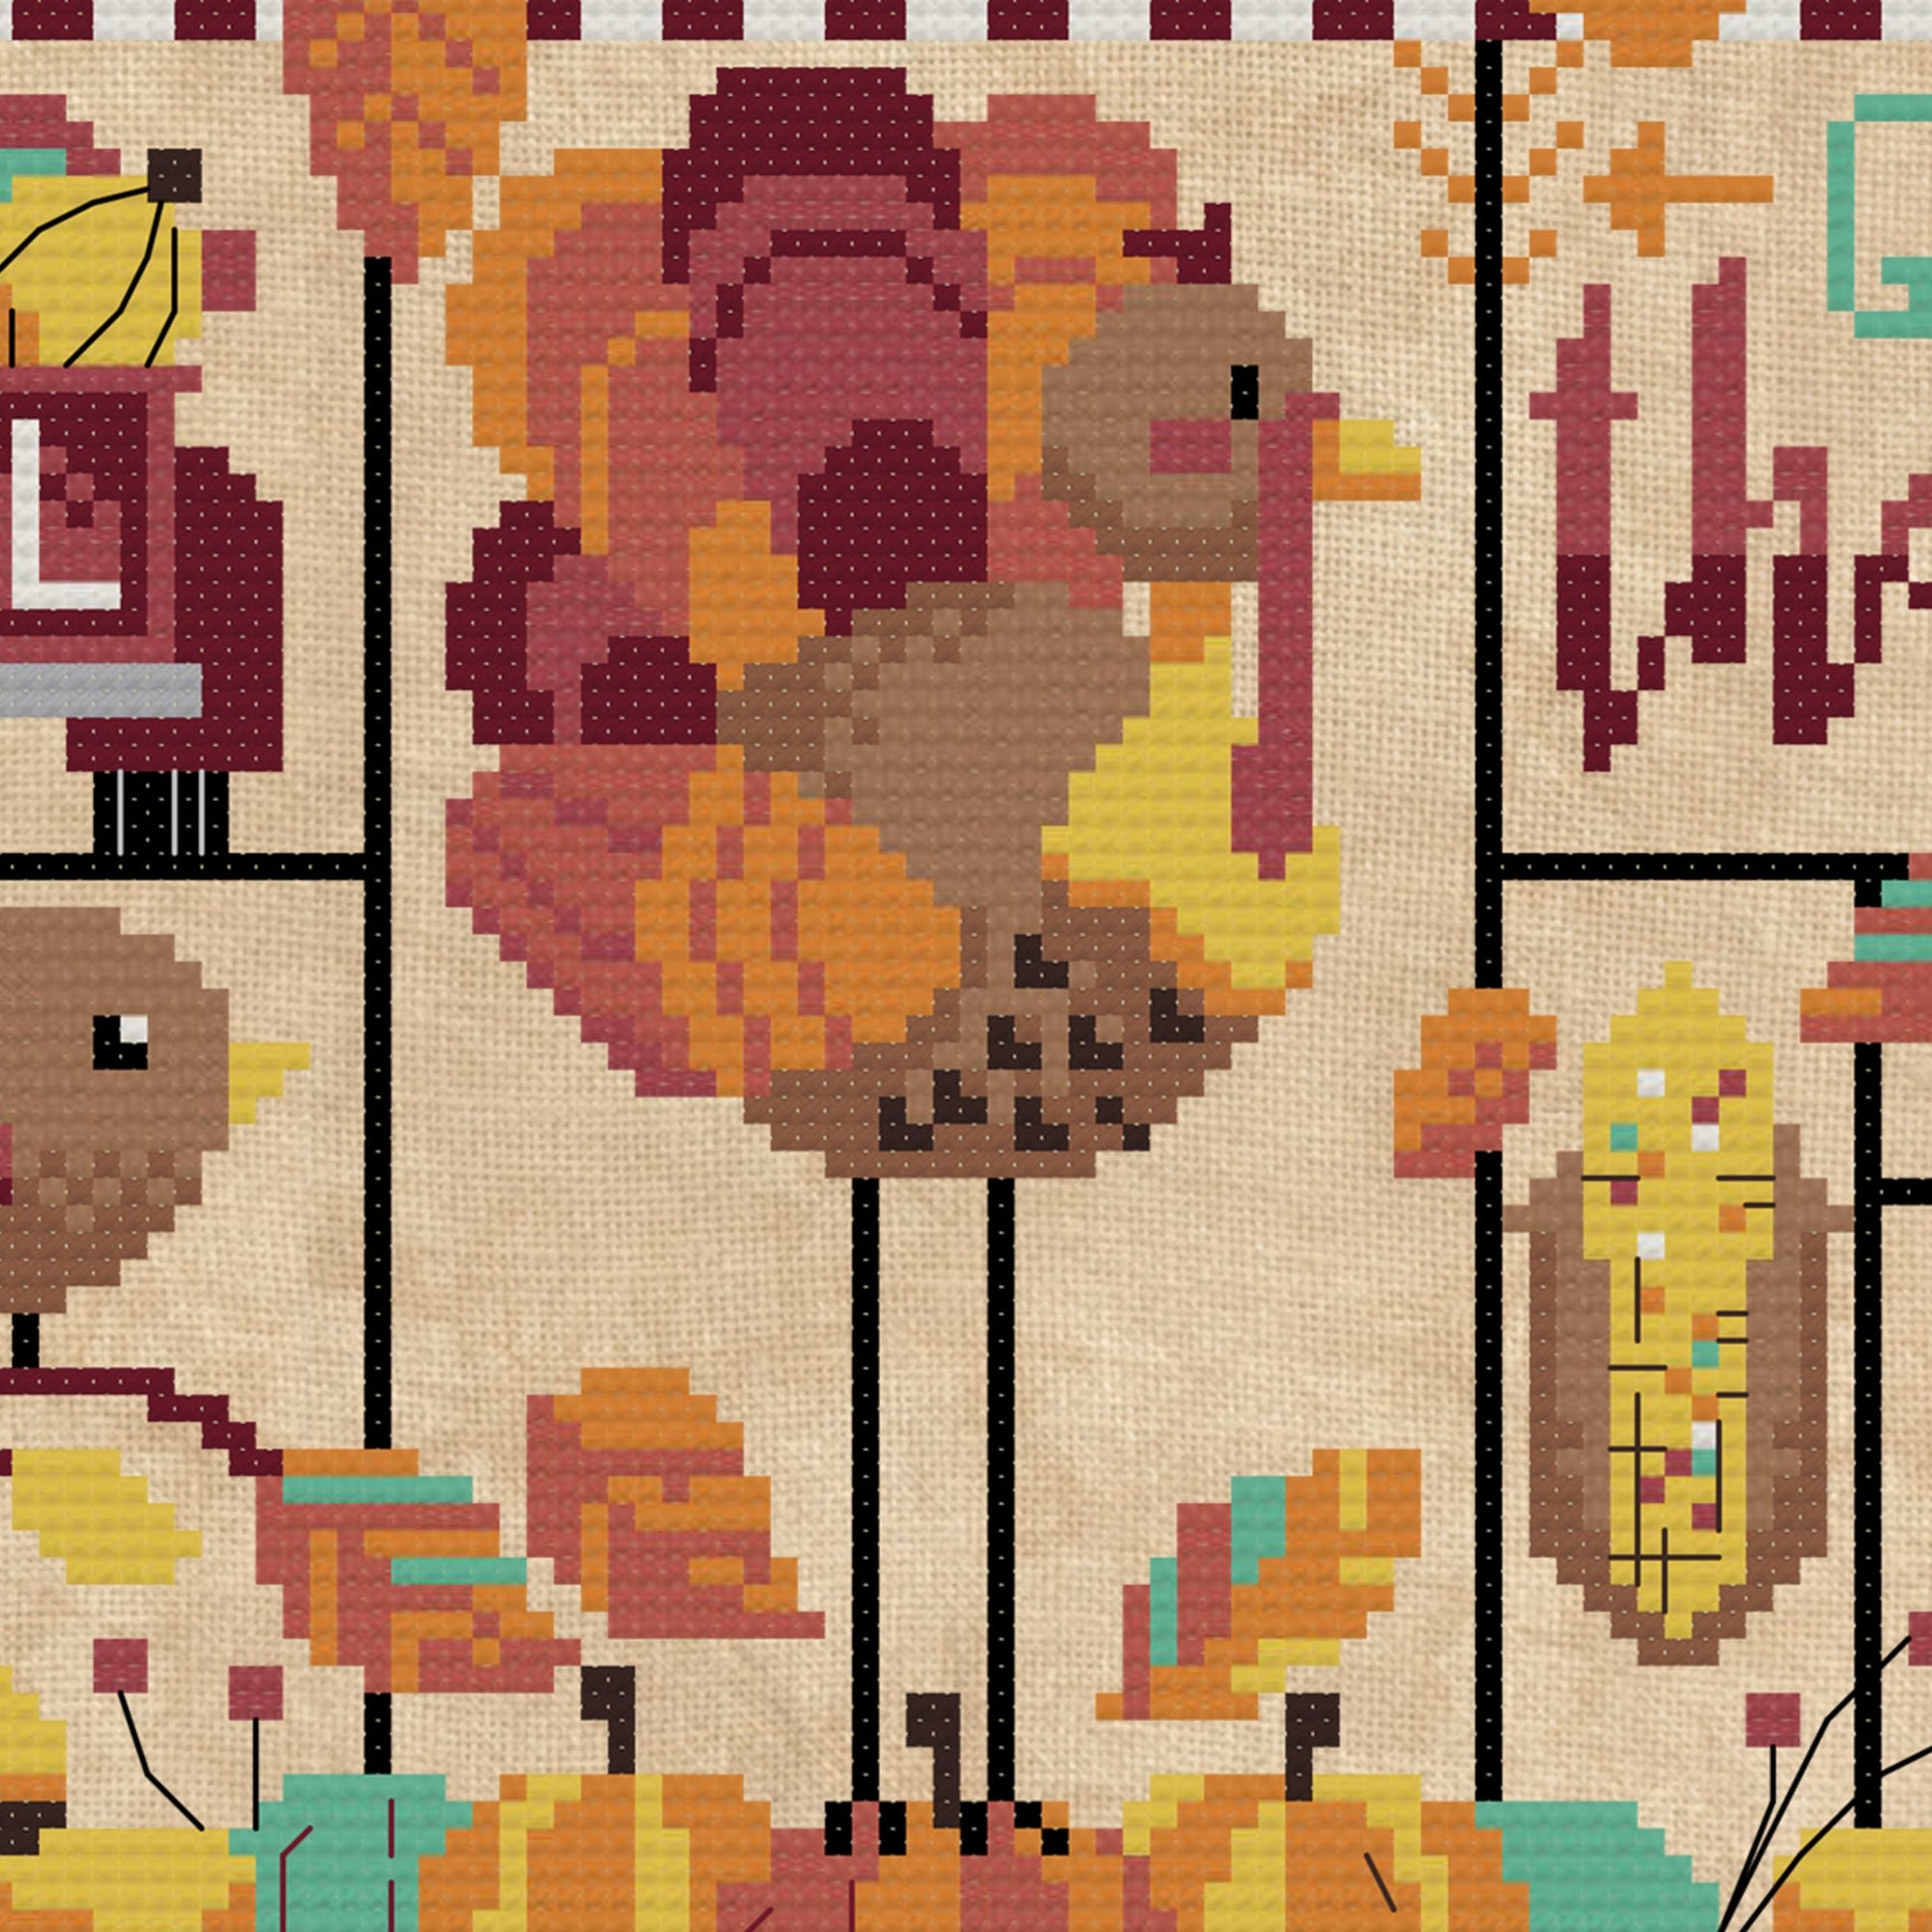 Free Thanksgiving Cross Stitch Pattern - Petite Stitches Series, Free PDF  Fat Quarter Shop Exclusive